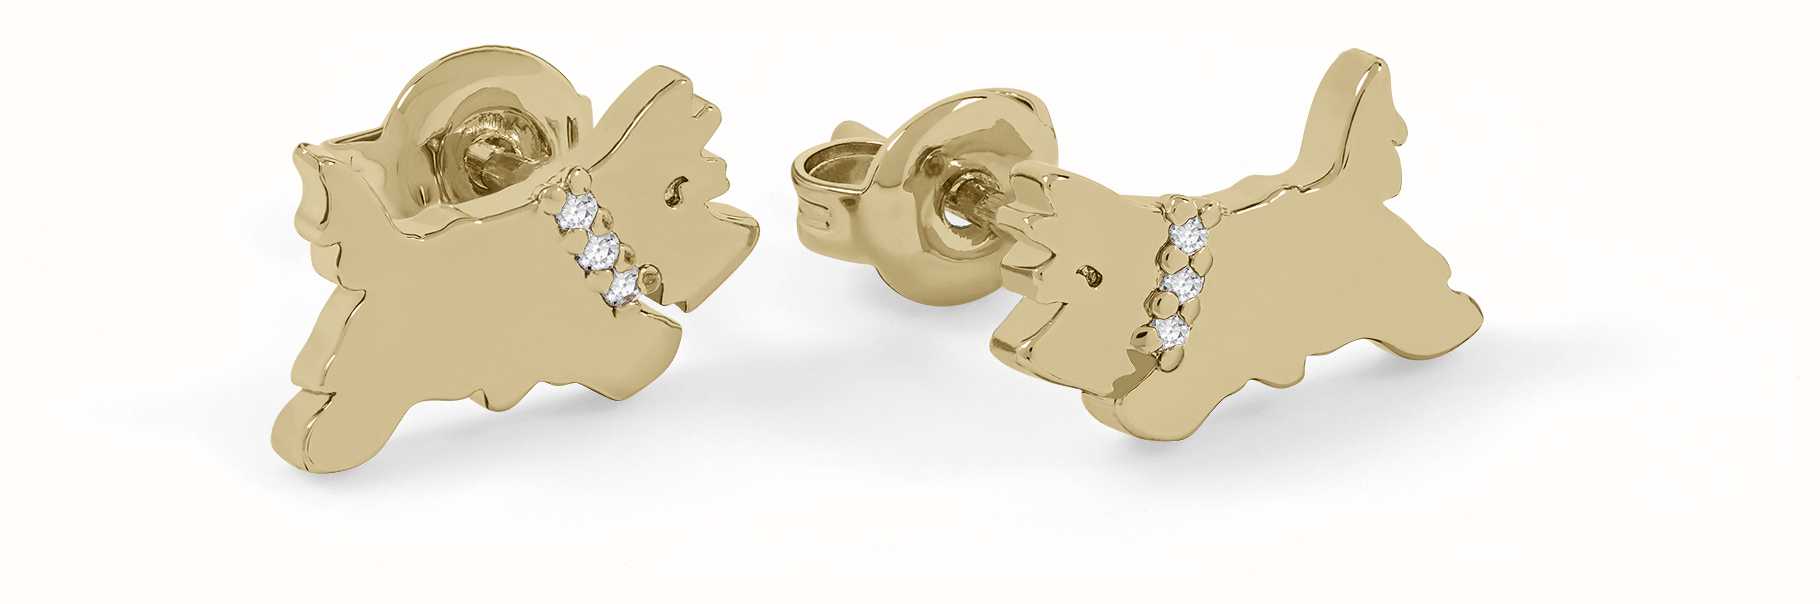 Radley Jewellery Set Of 2 Pairs Of Stud Earrings | Gold Plated ...